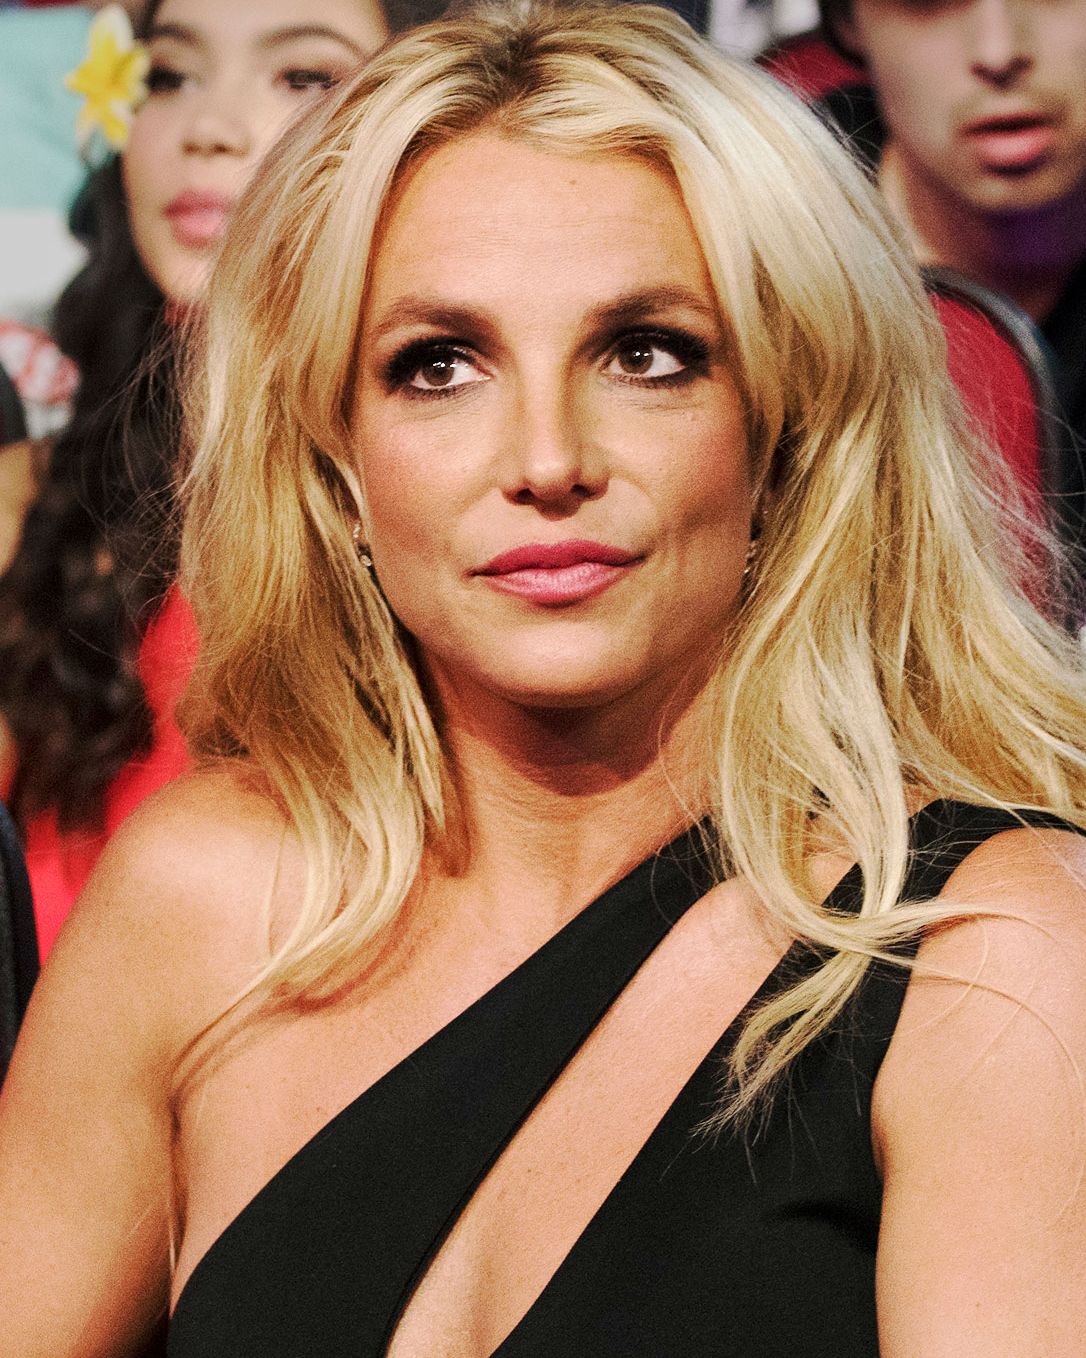 Conservatorship Freebritney For Britney Spears Explained